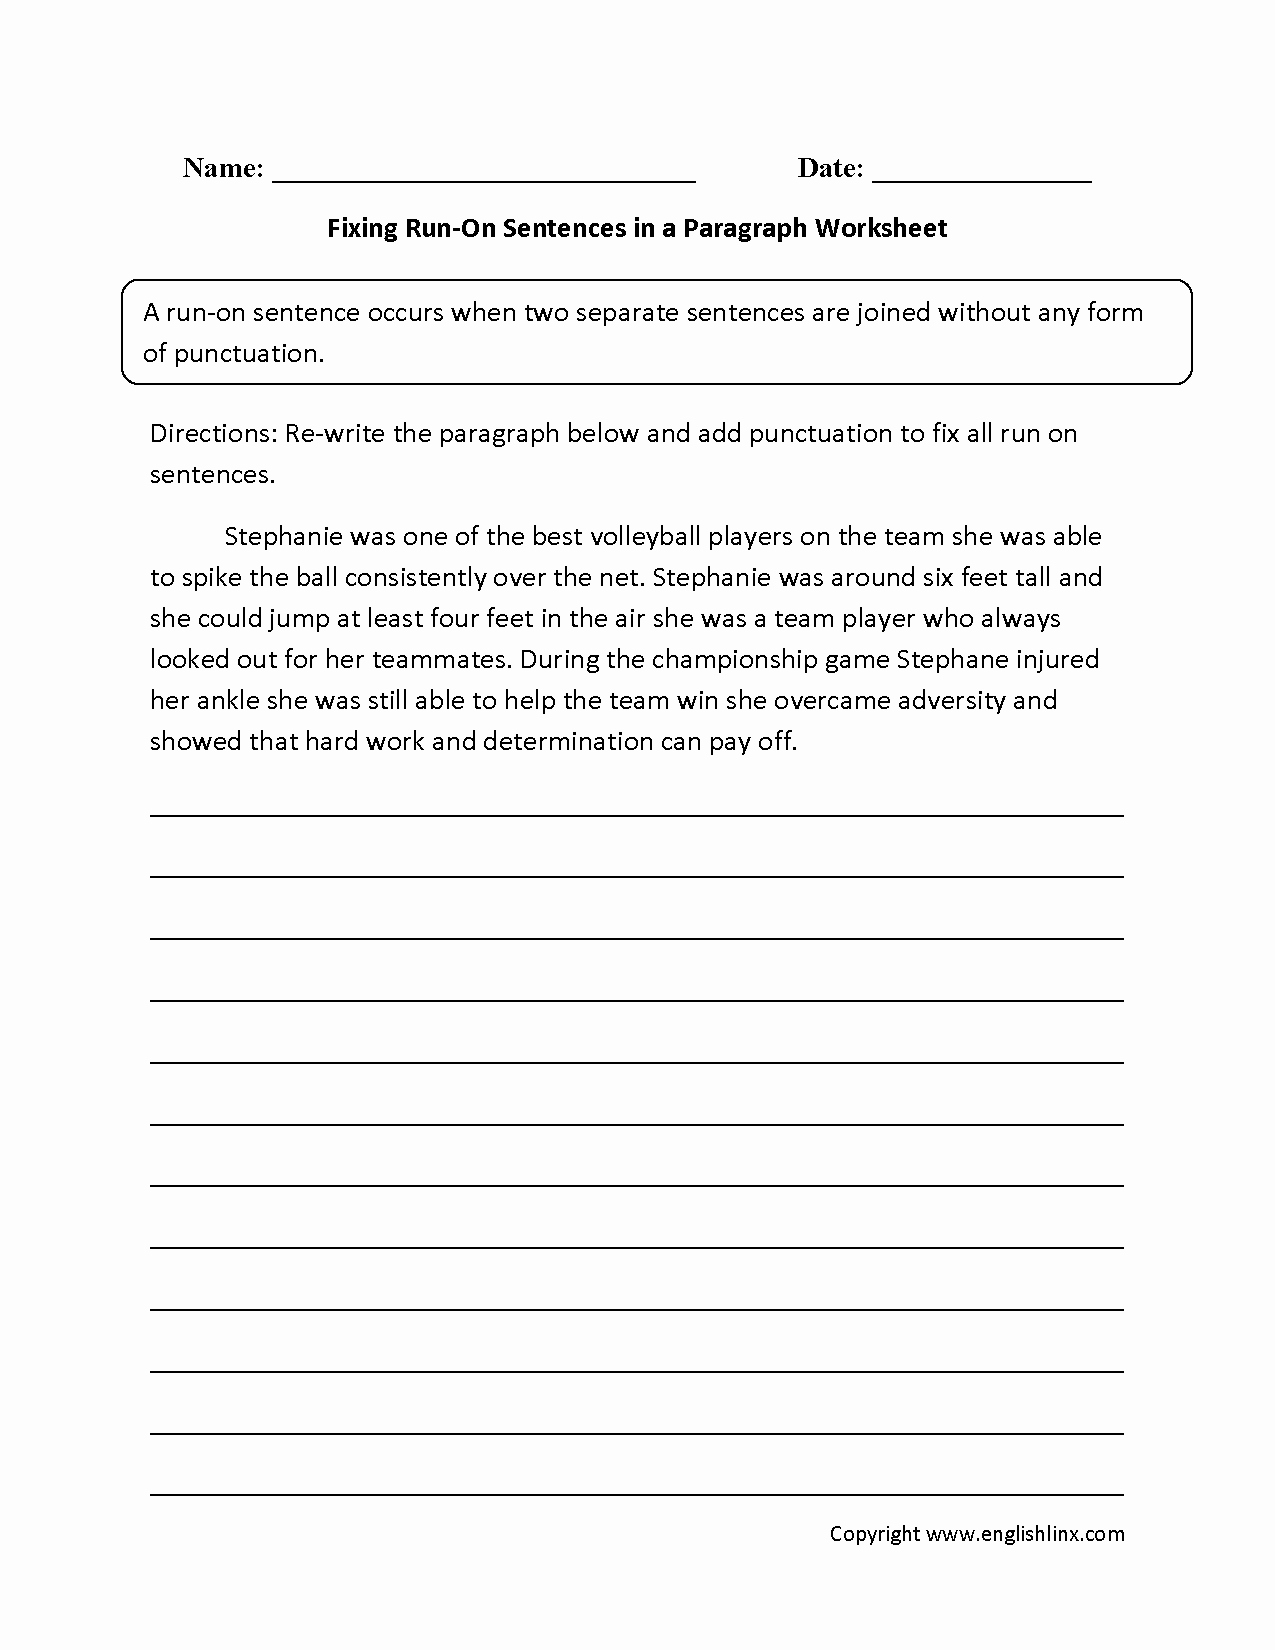 Run On Sentence Worksheet Pdf Inspirational Fixing Paragraphs with Run On Sentences Worksheets